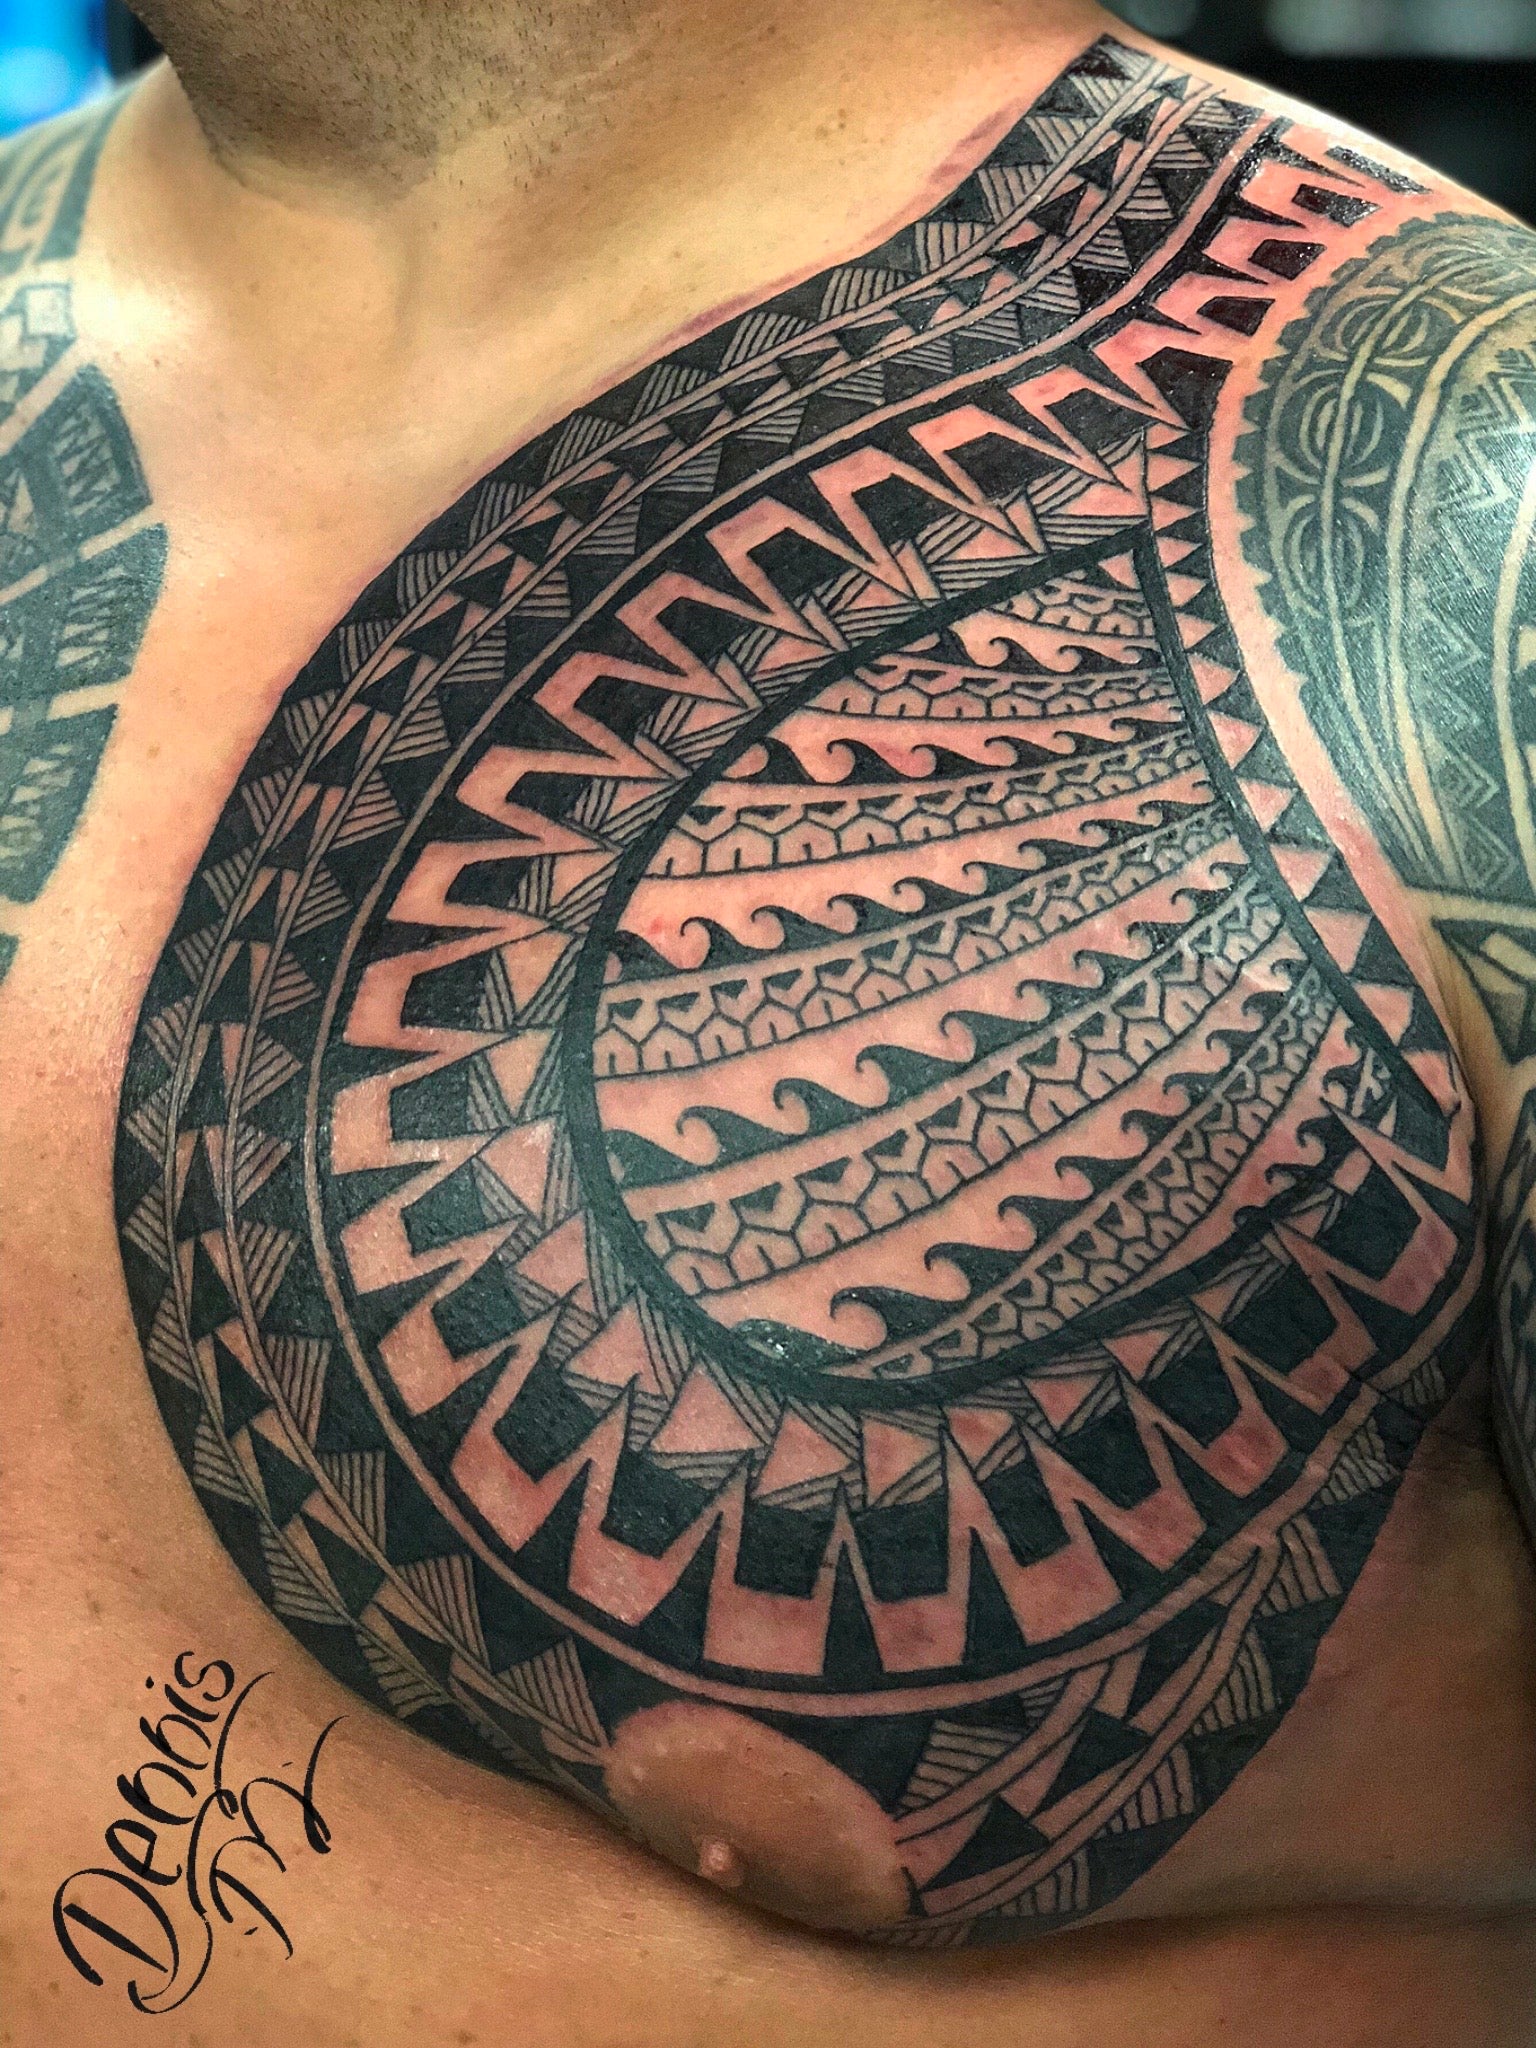 Elbow tattoo sleeve. Thank you... - Paradise INK Tattoo Fiji | Facebook